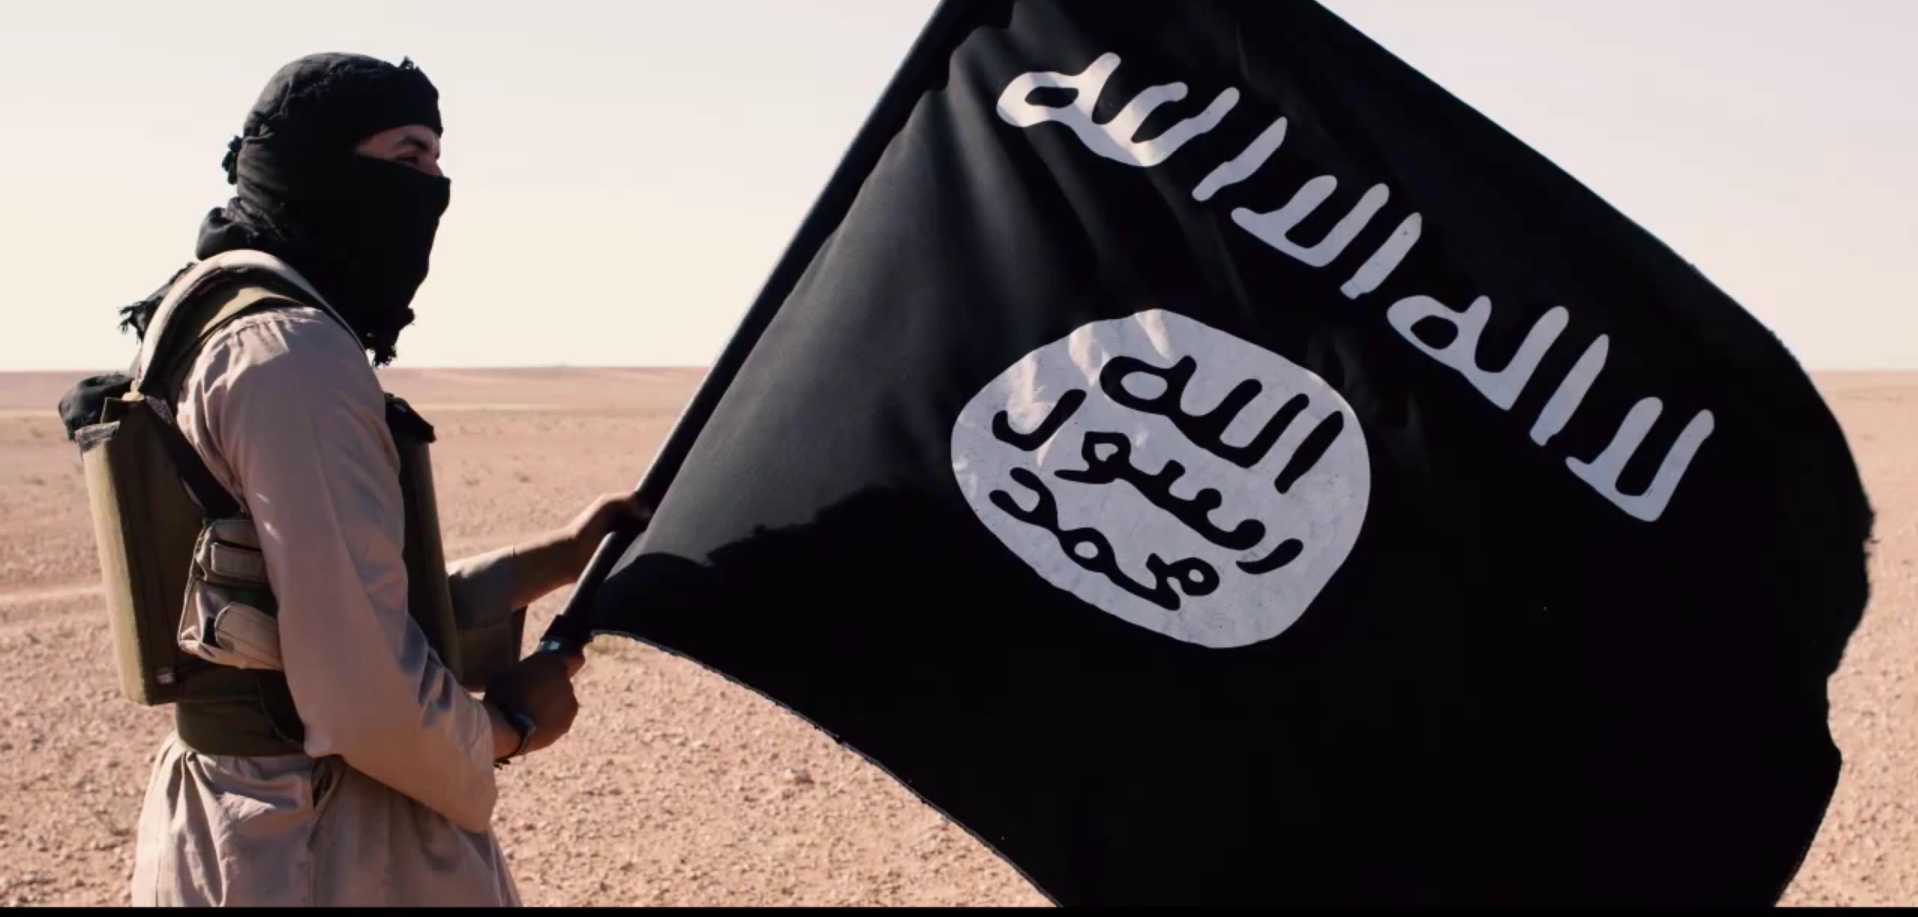 Фото террористов на фоне флага игил. Флаг ИГИЛ. Исламское государство террористическая организация флаг.